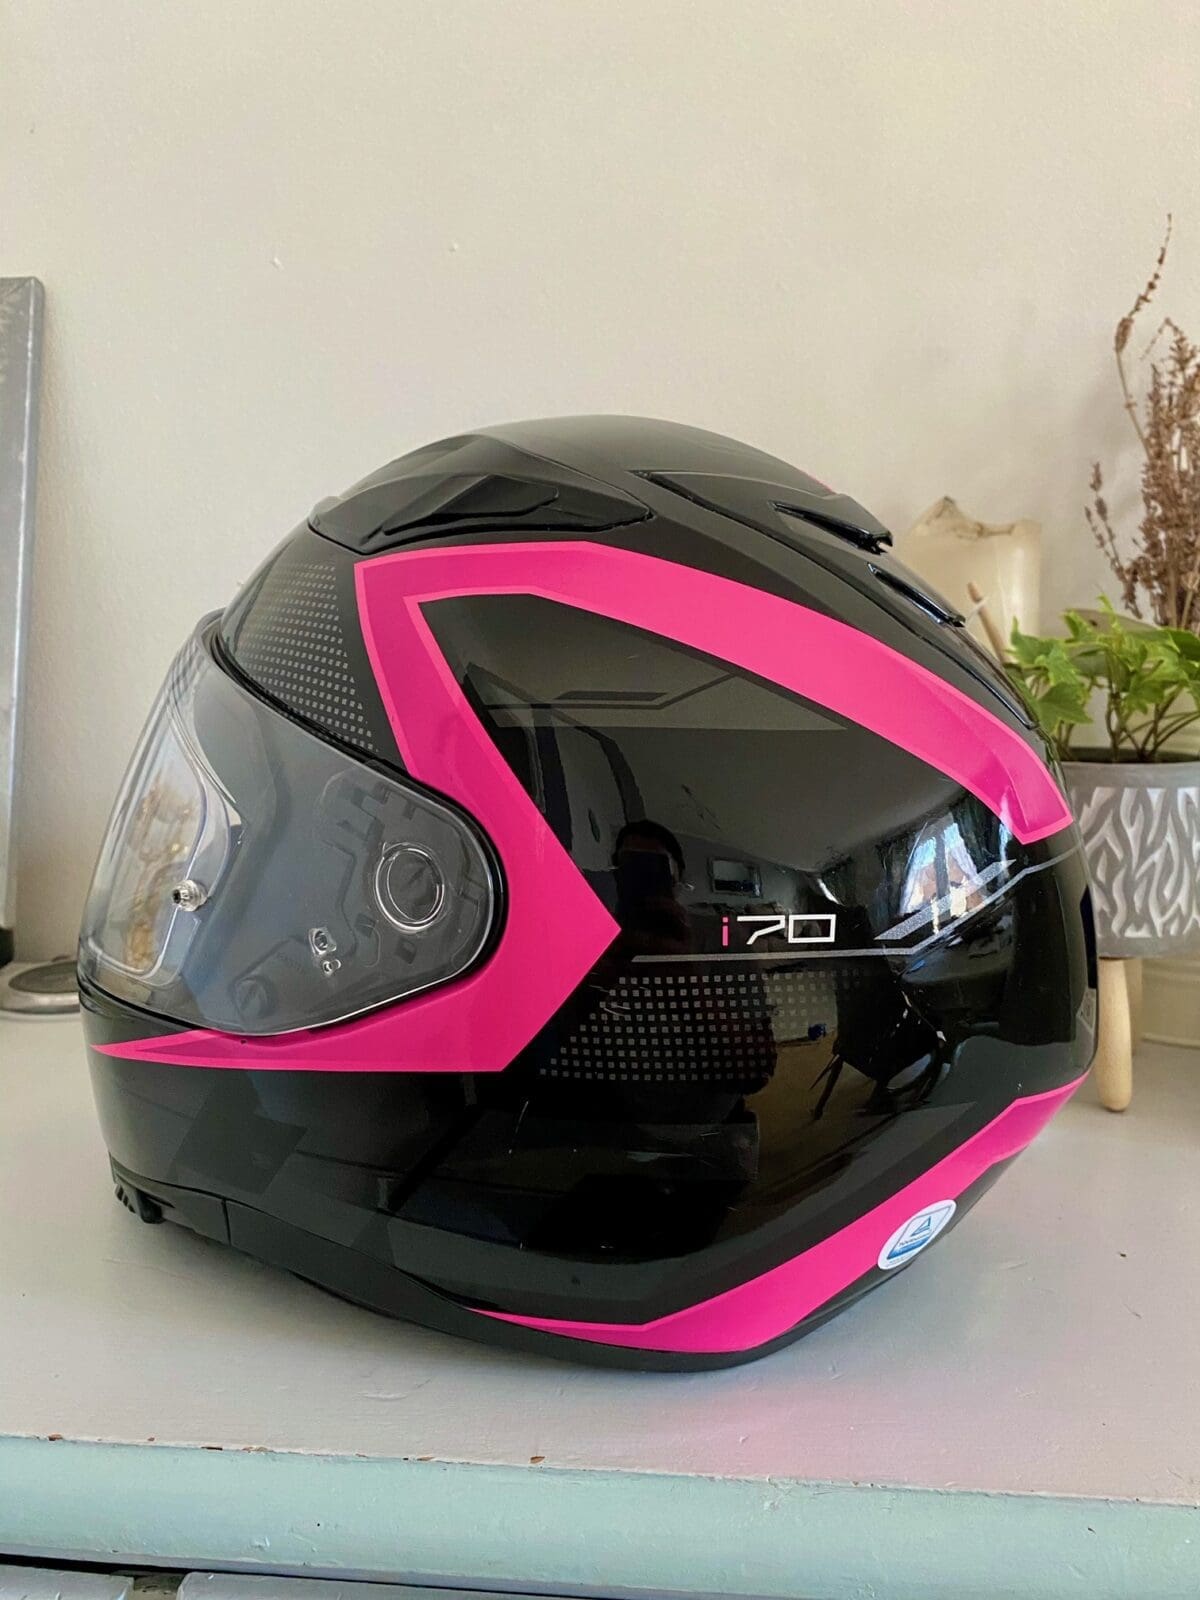 HJC i70 Astro motorcycle helmet from behind